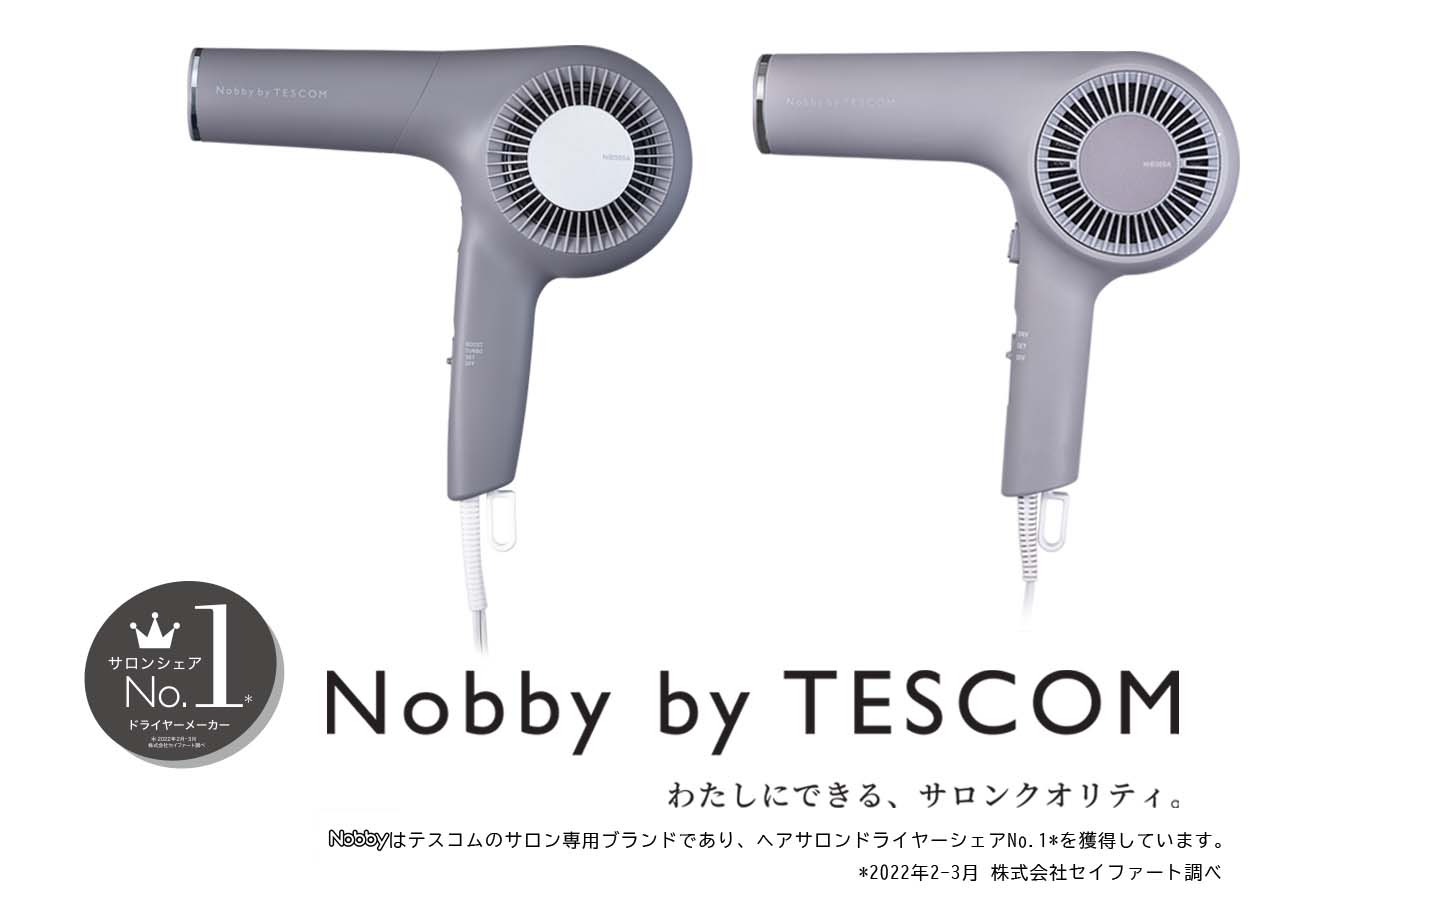 Nobby by TESCOM」のブランド史上最もパワフルな風速・風圧を実現 地肌